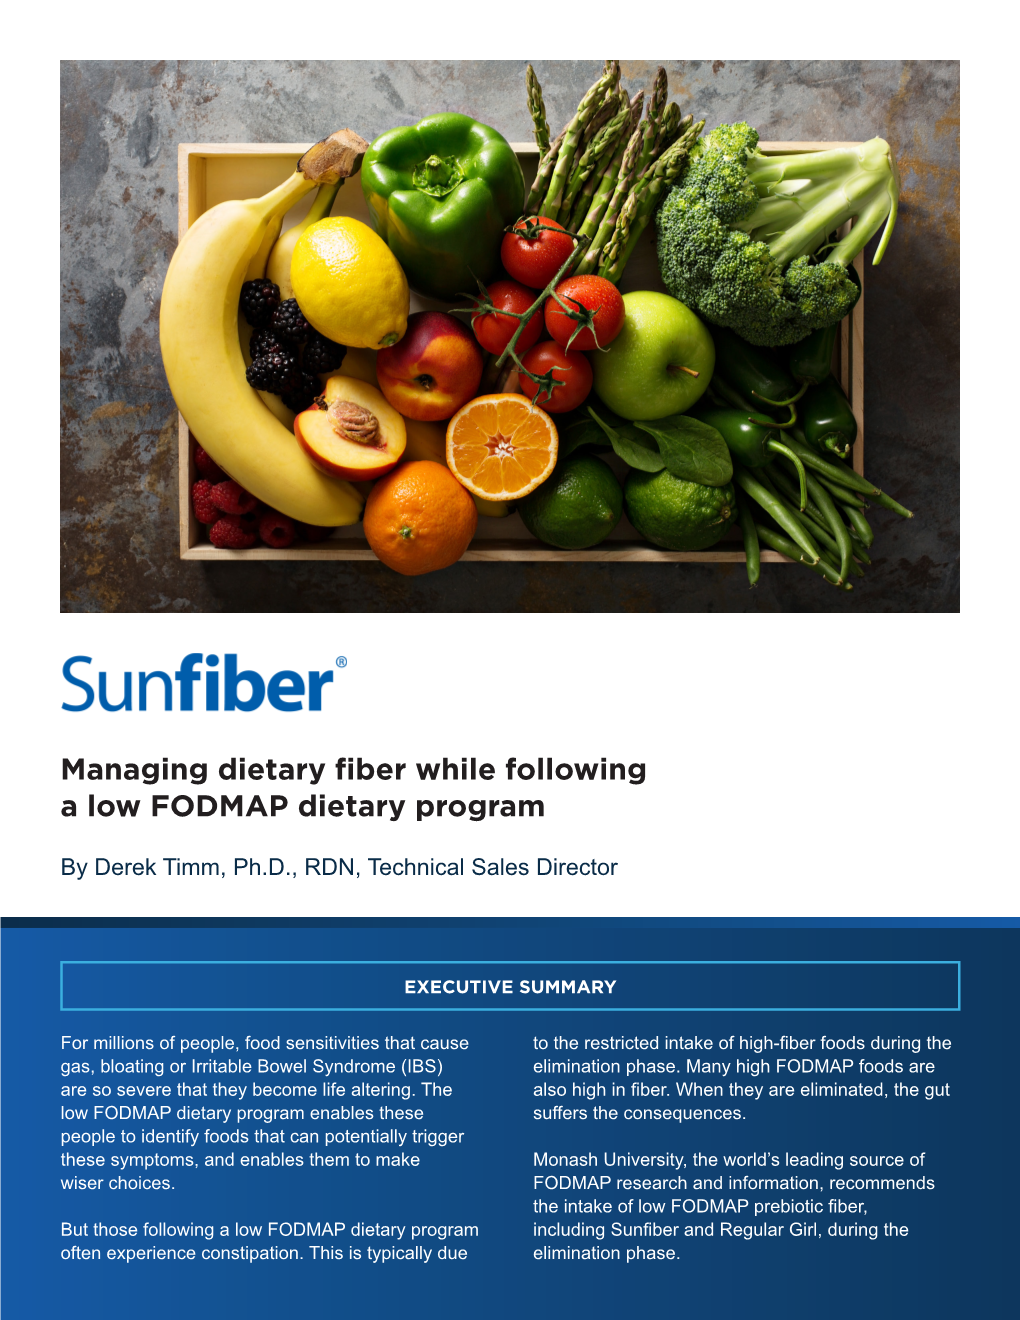 Managing Dietary Fiber While Following a Low FODMAP Dietary Program